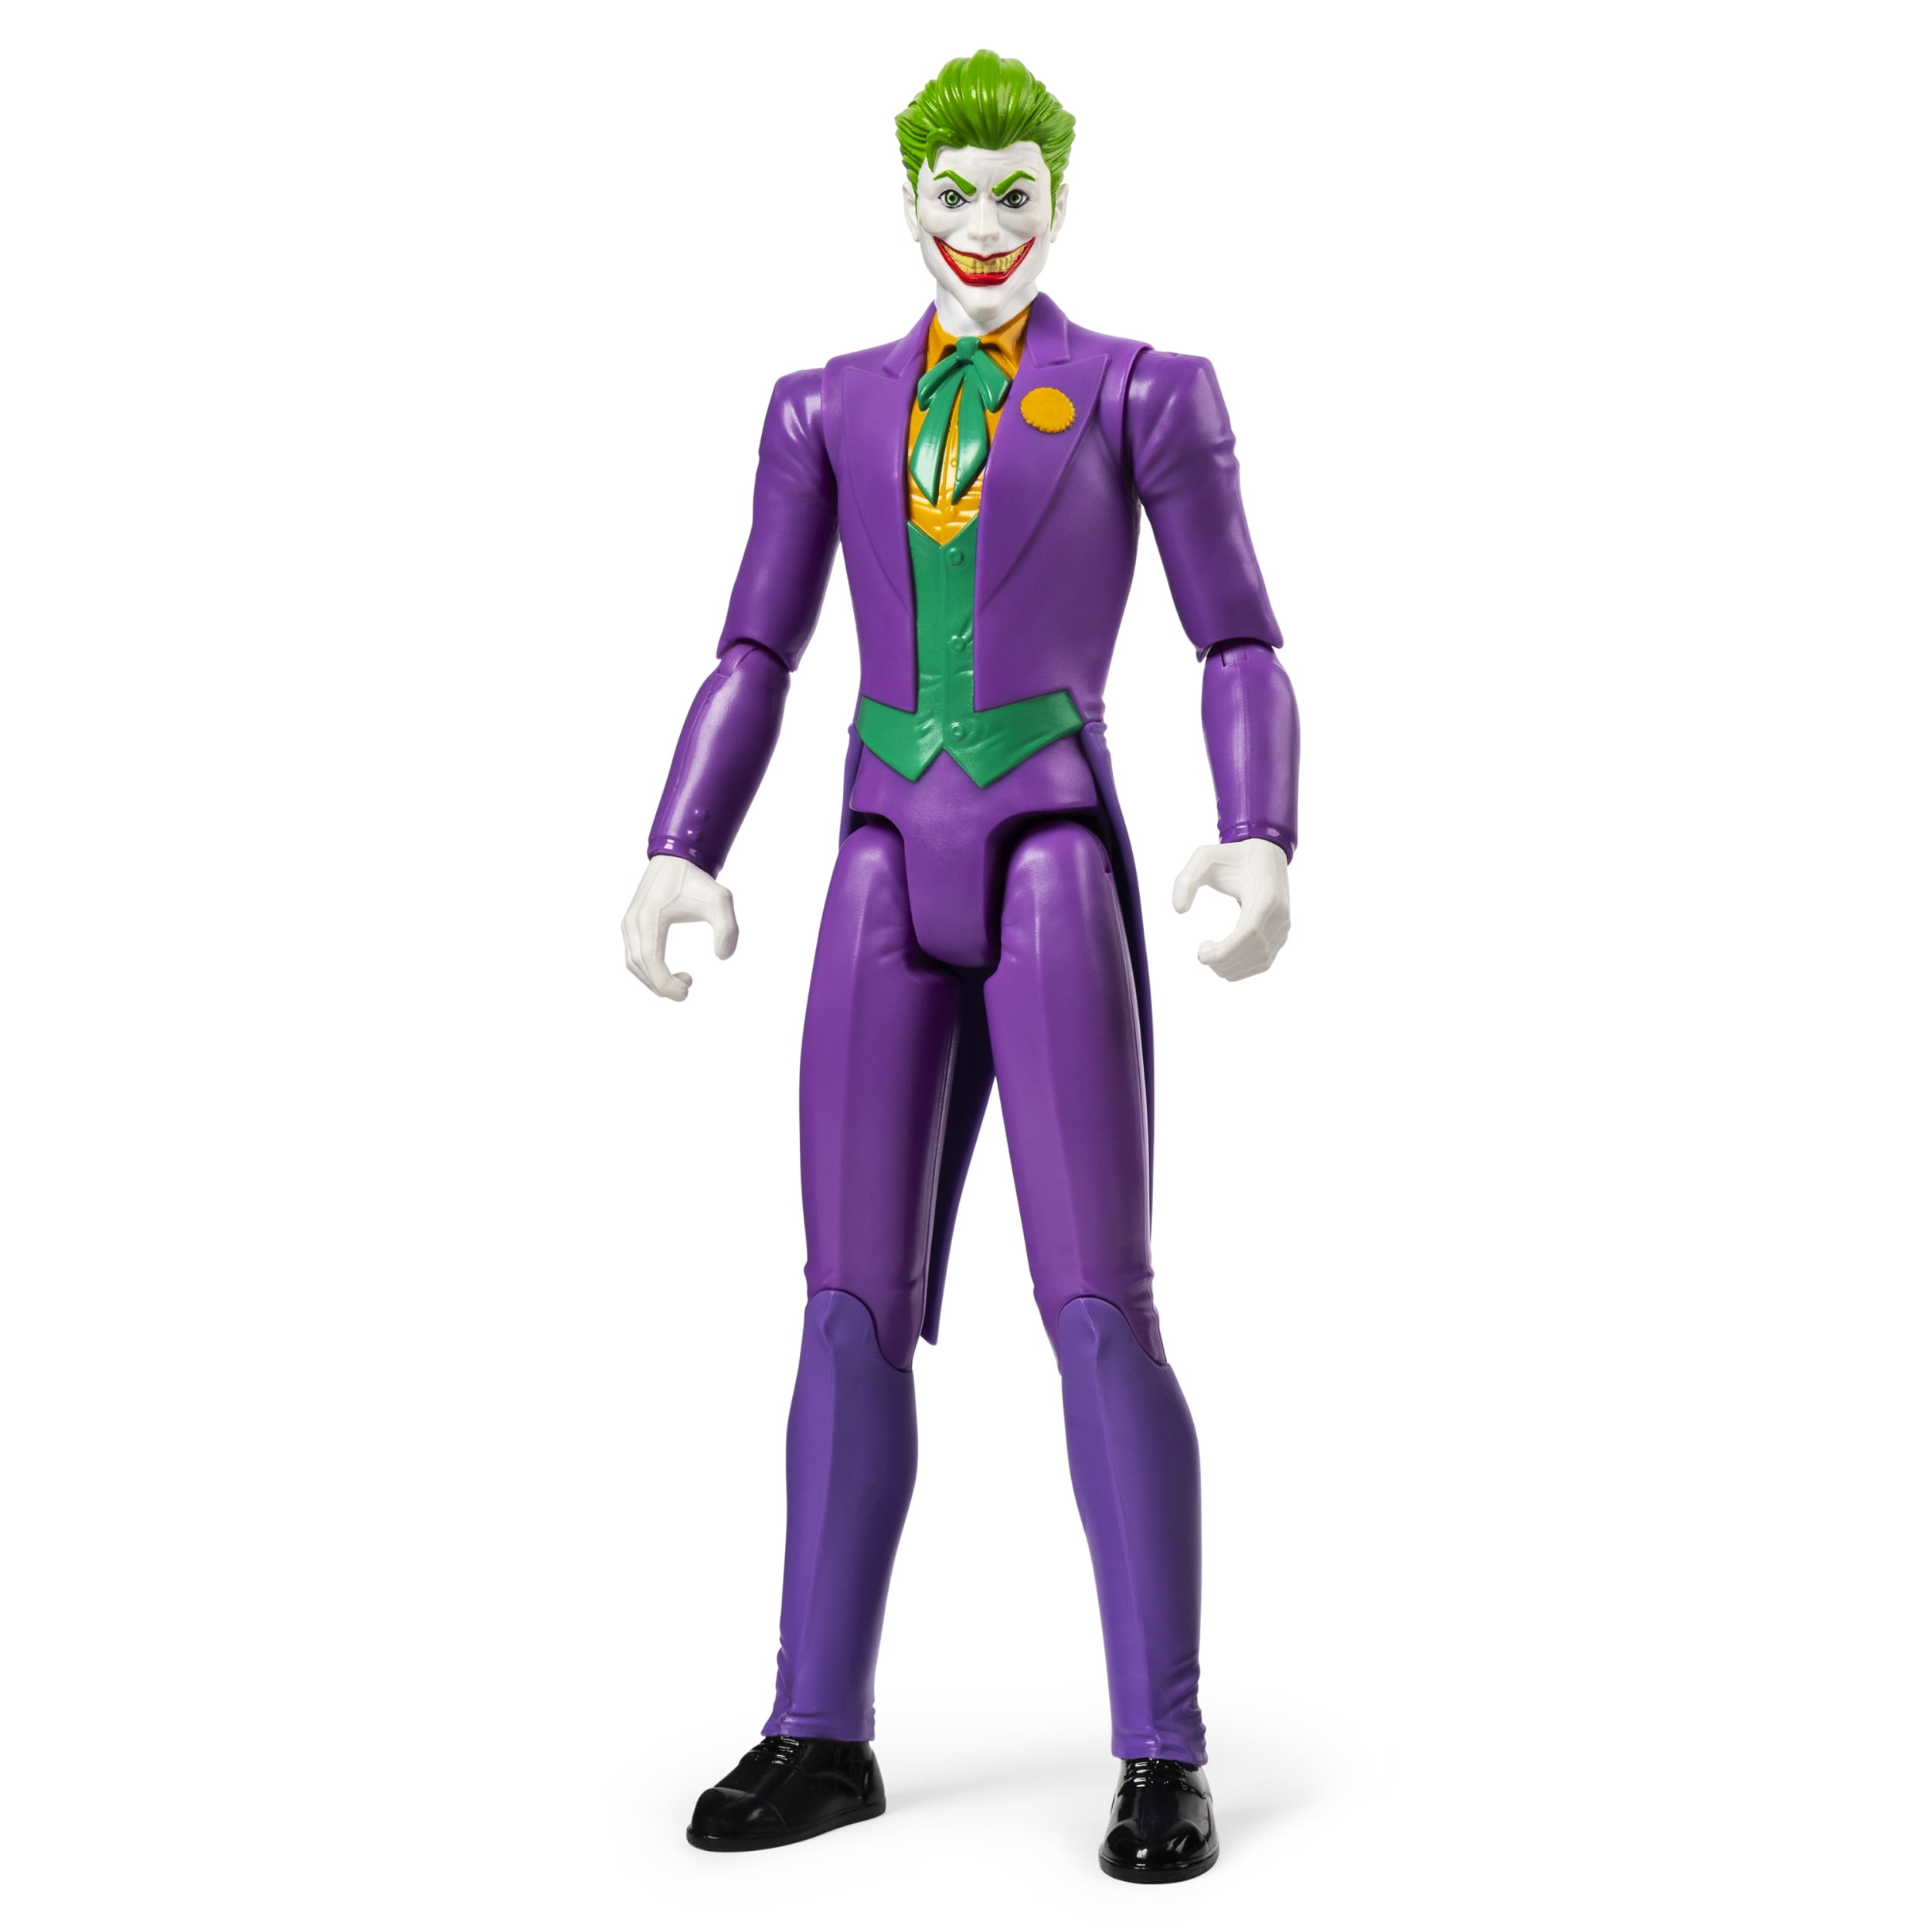 joker action figure